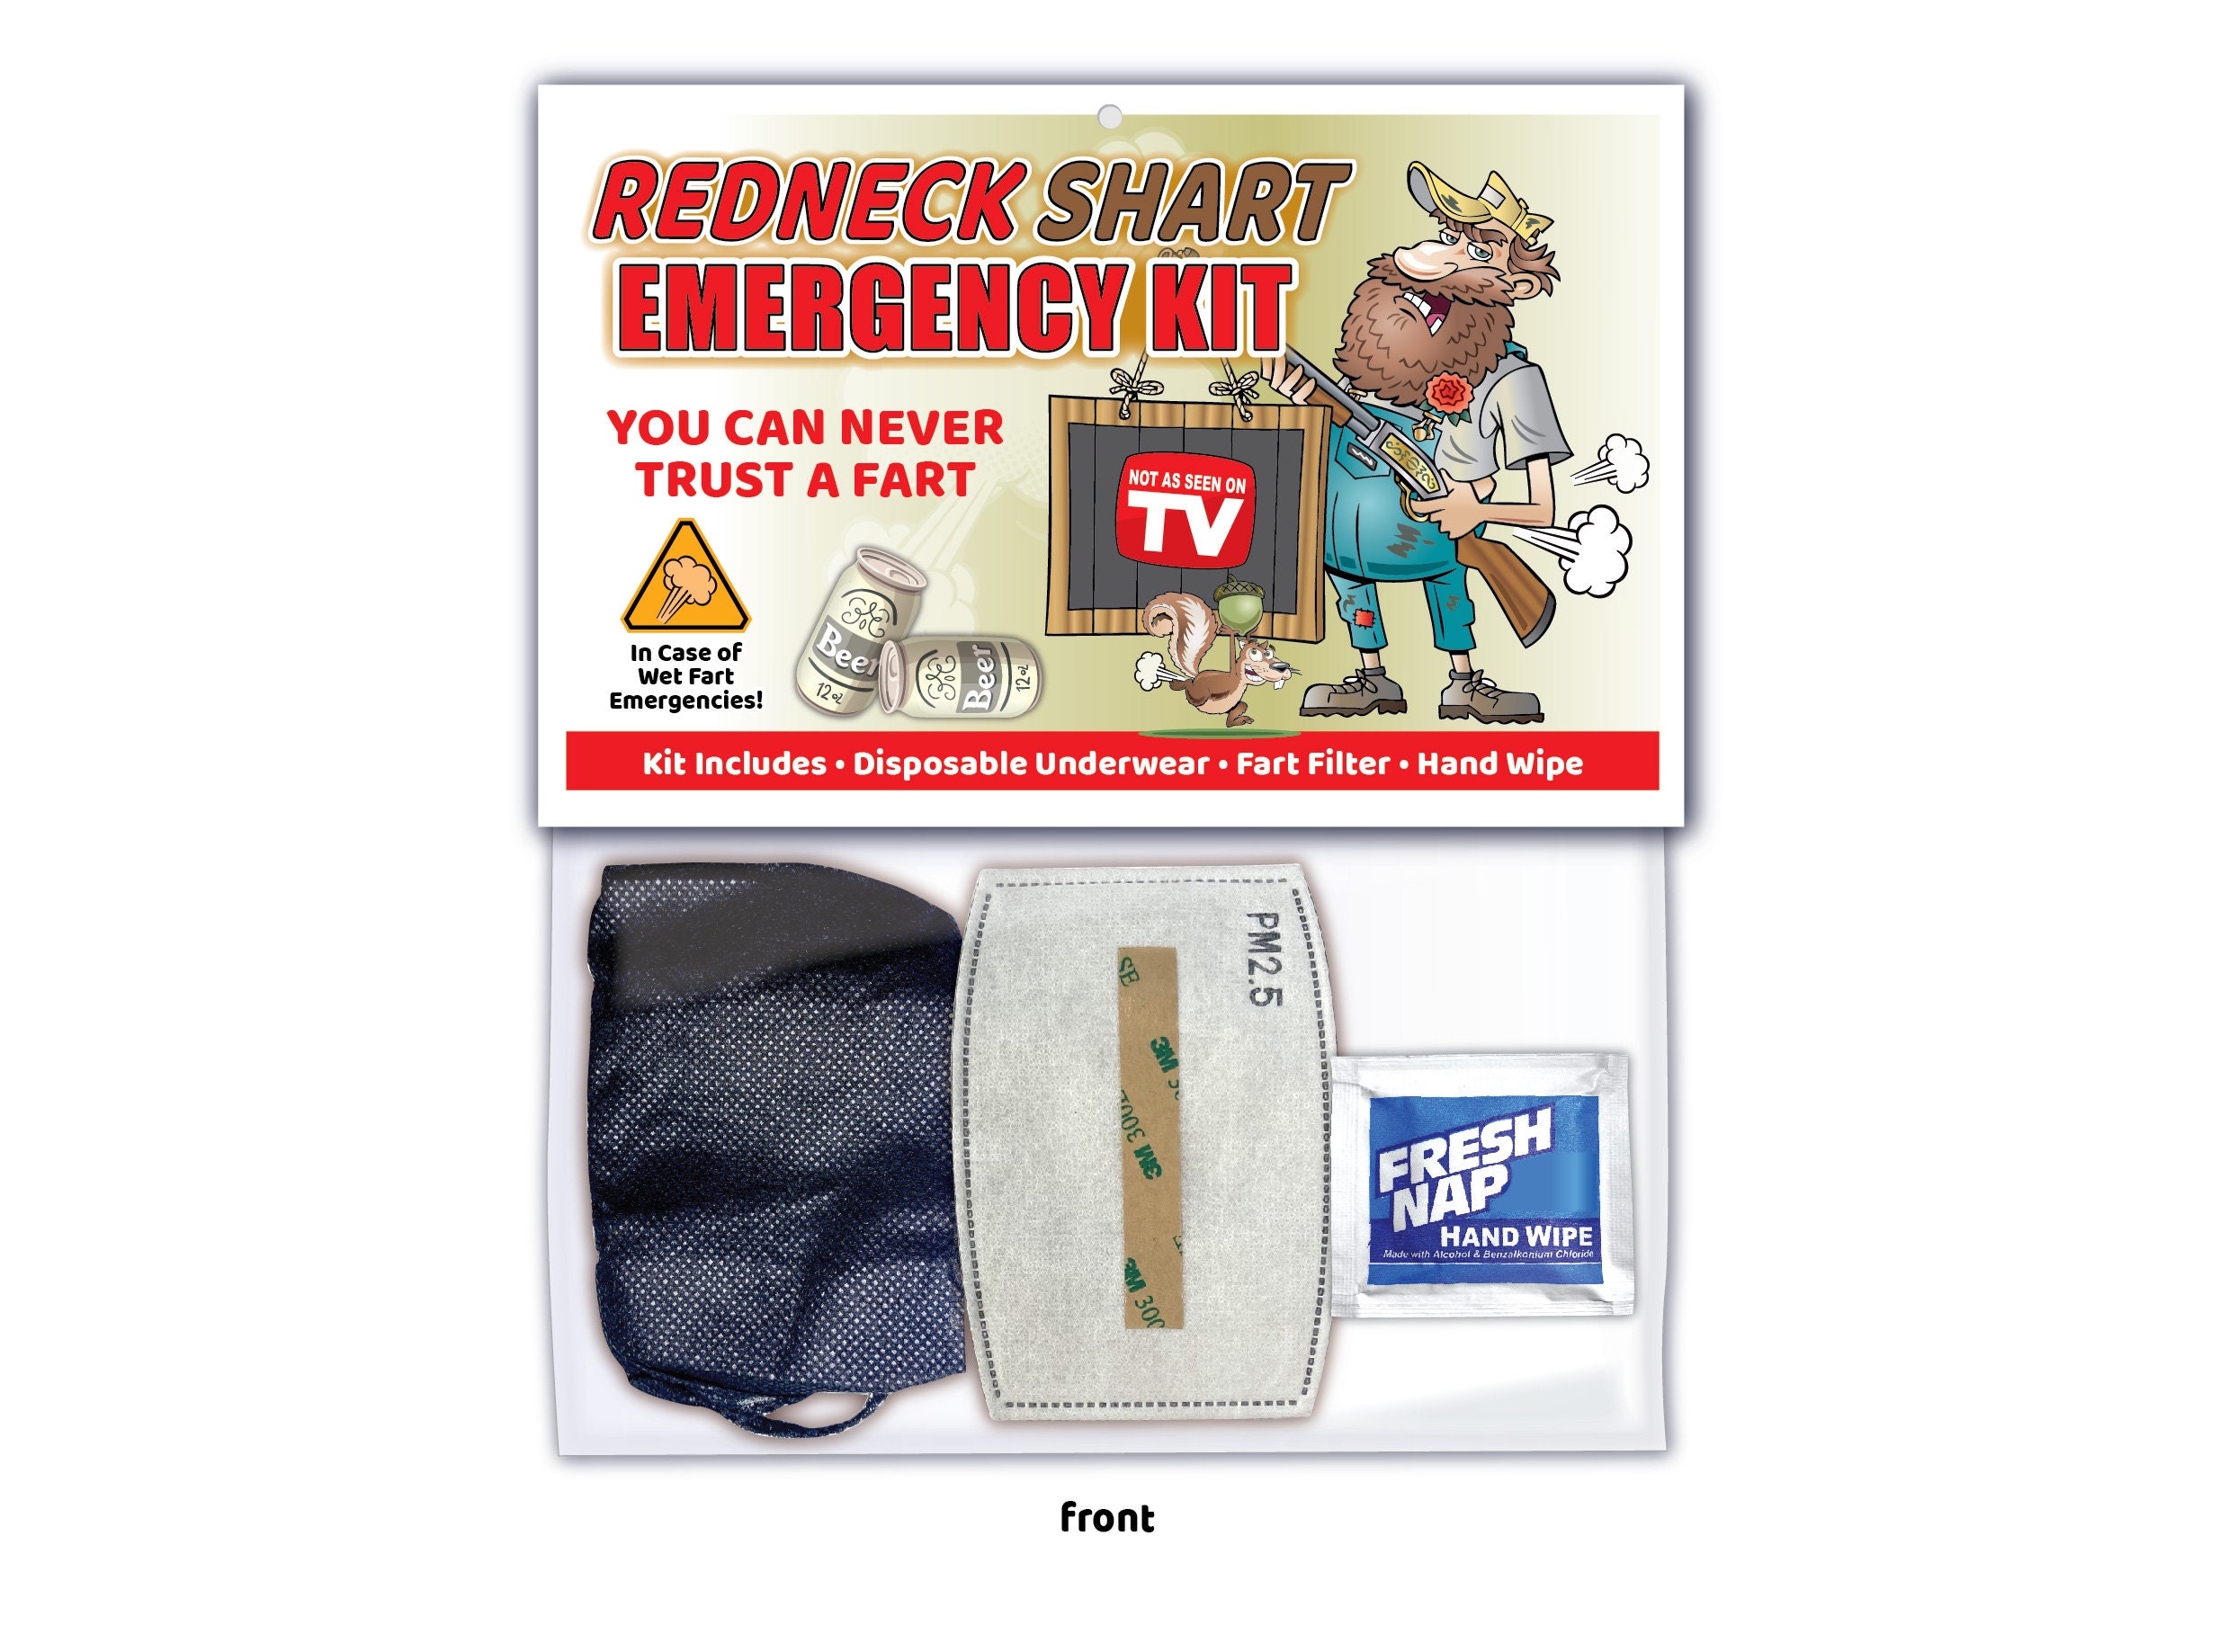 REDNECK FART Shart Emergency Kit GREAT Gift South Southern Husband Father  Christmas Birthday Present Party Joke Prank Gag 